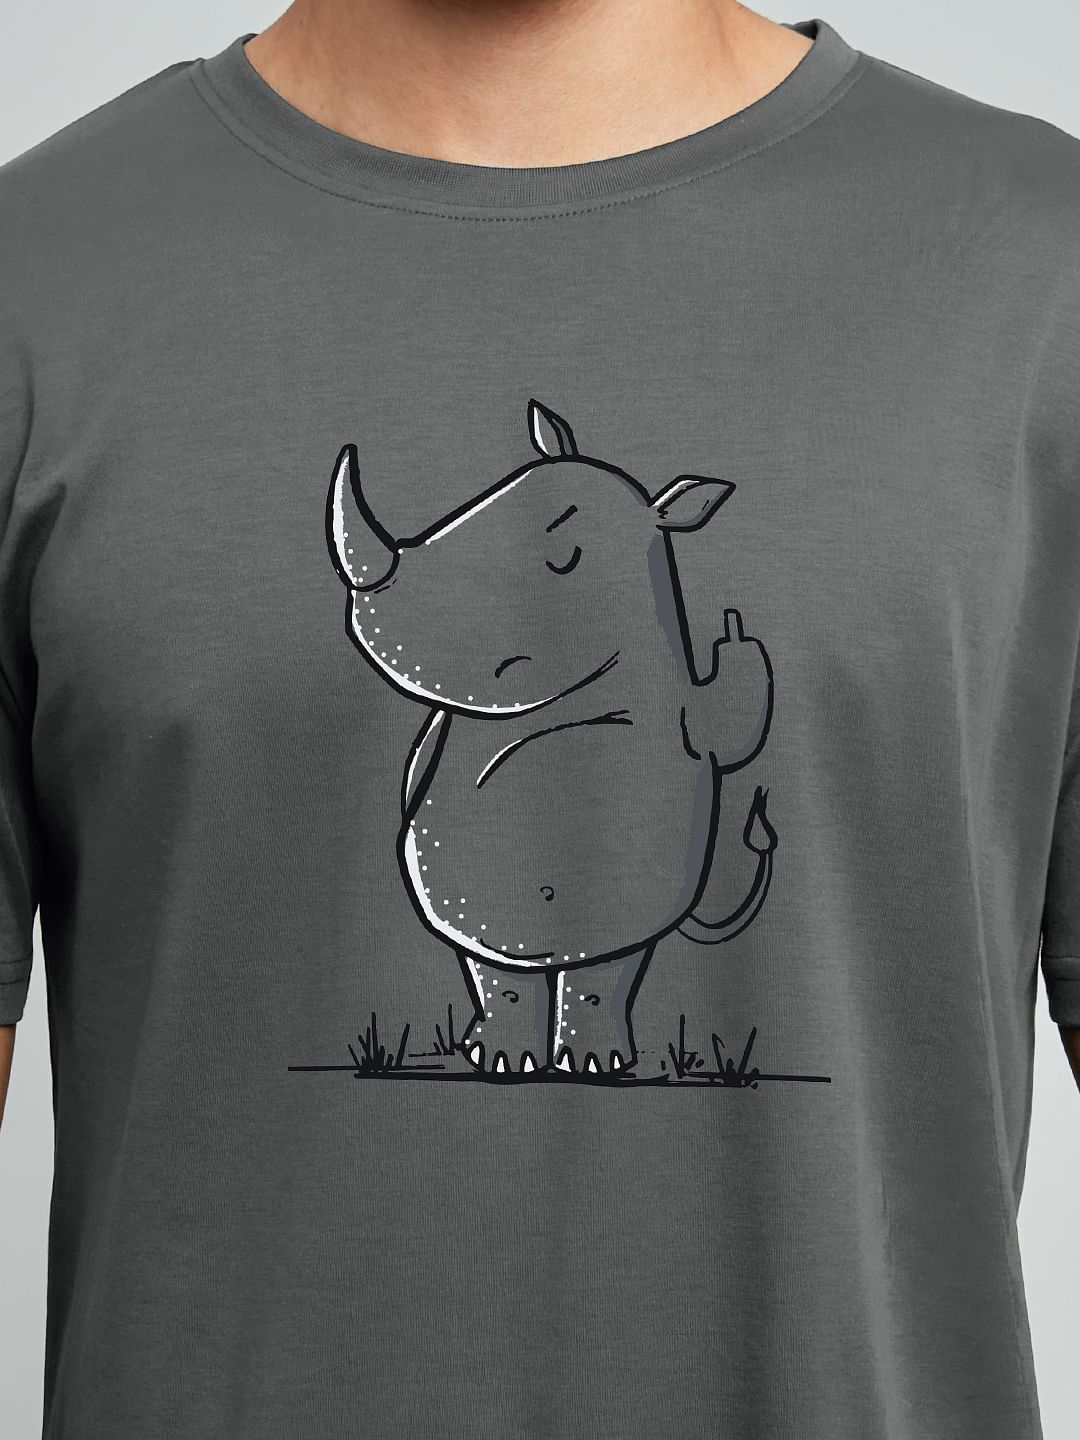 Save the Rhino